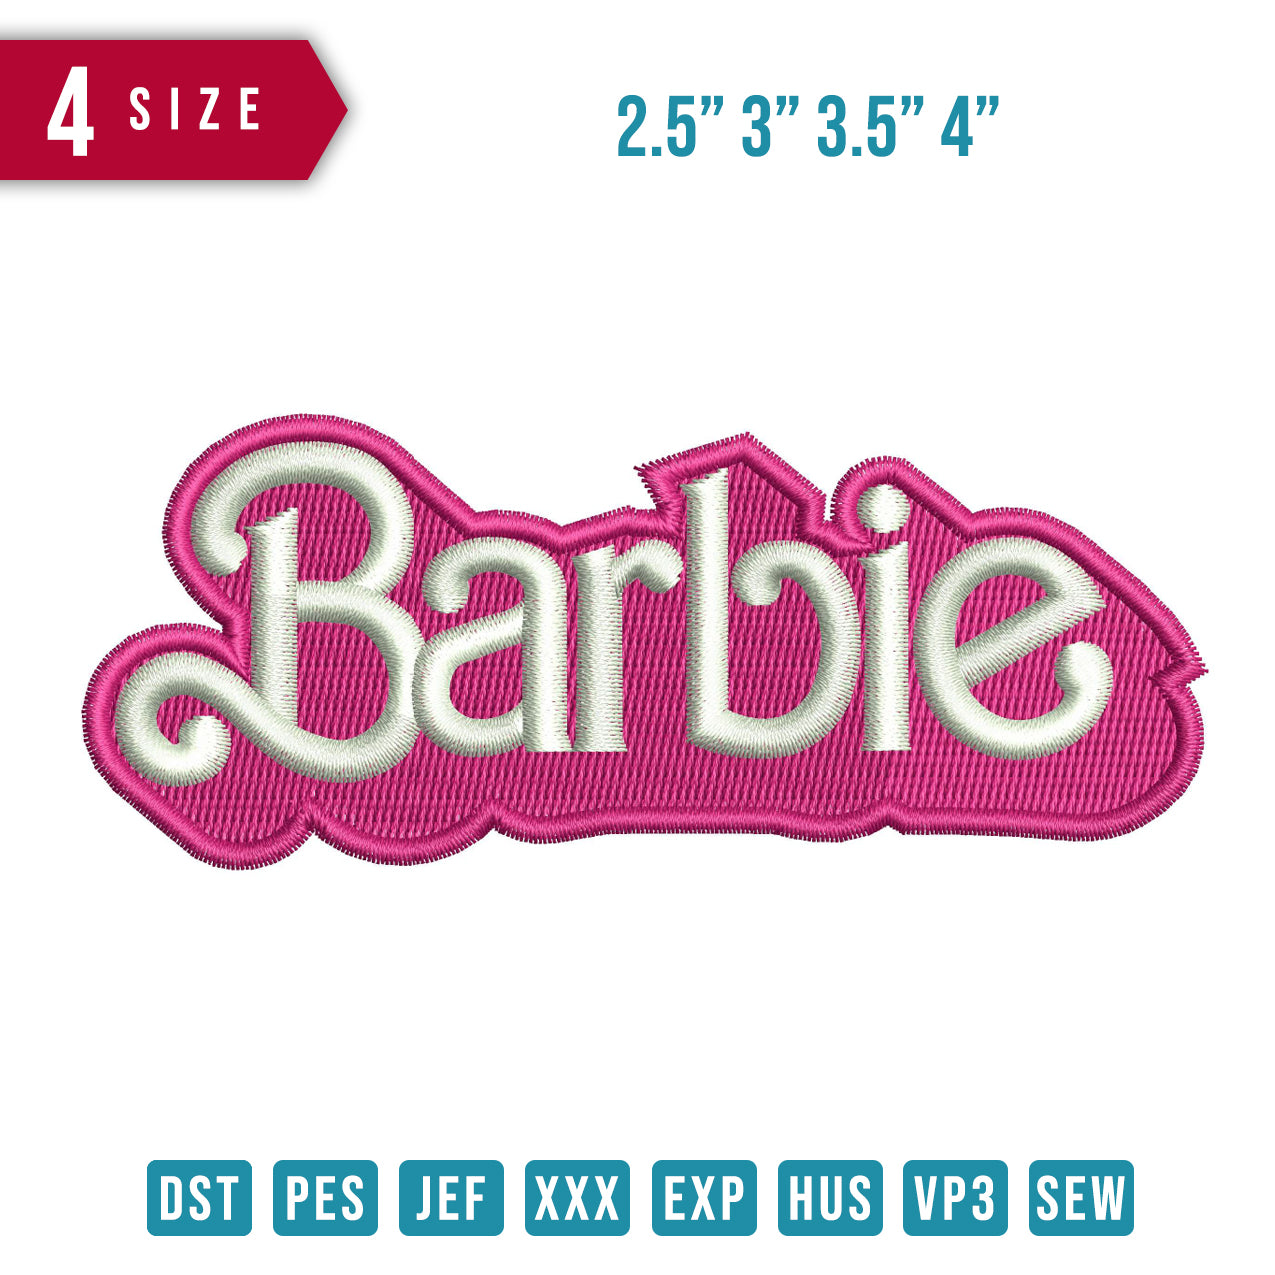 Barbie-Logo